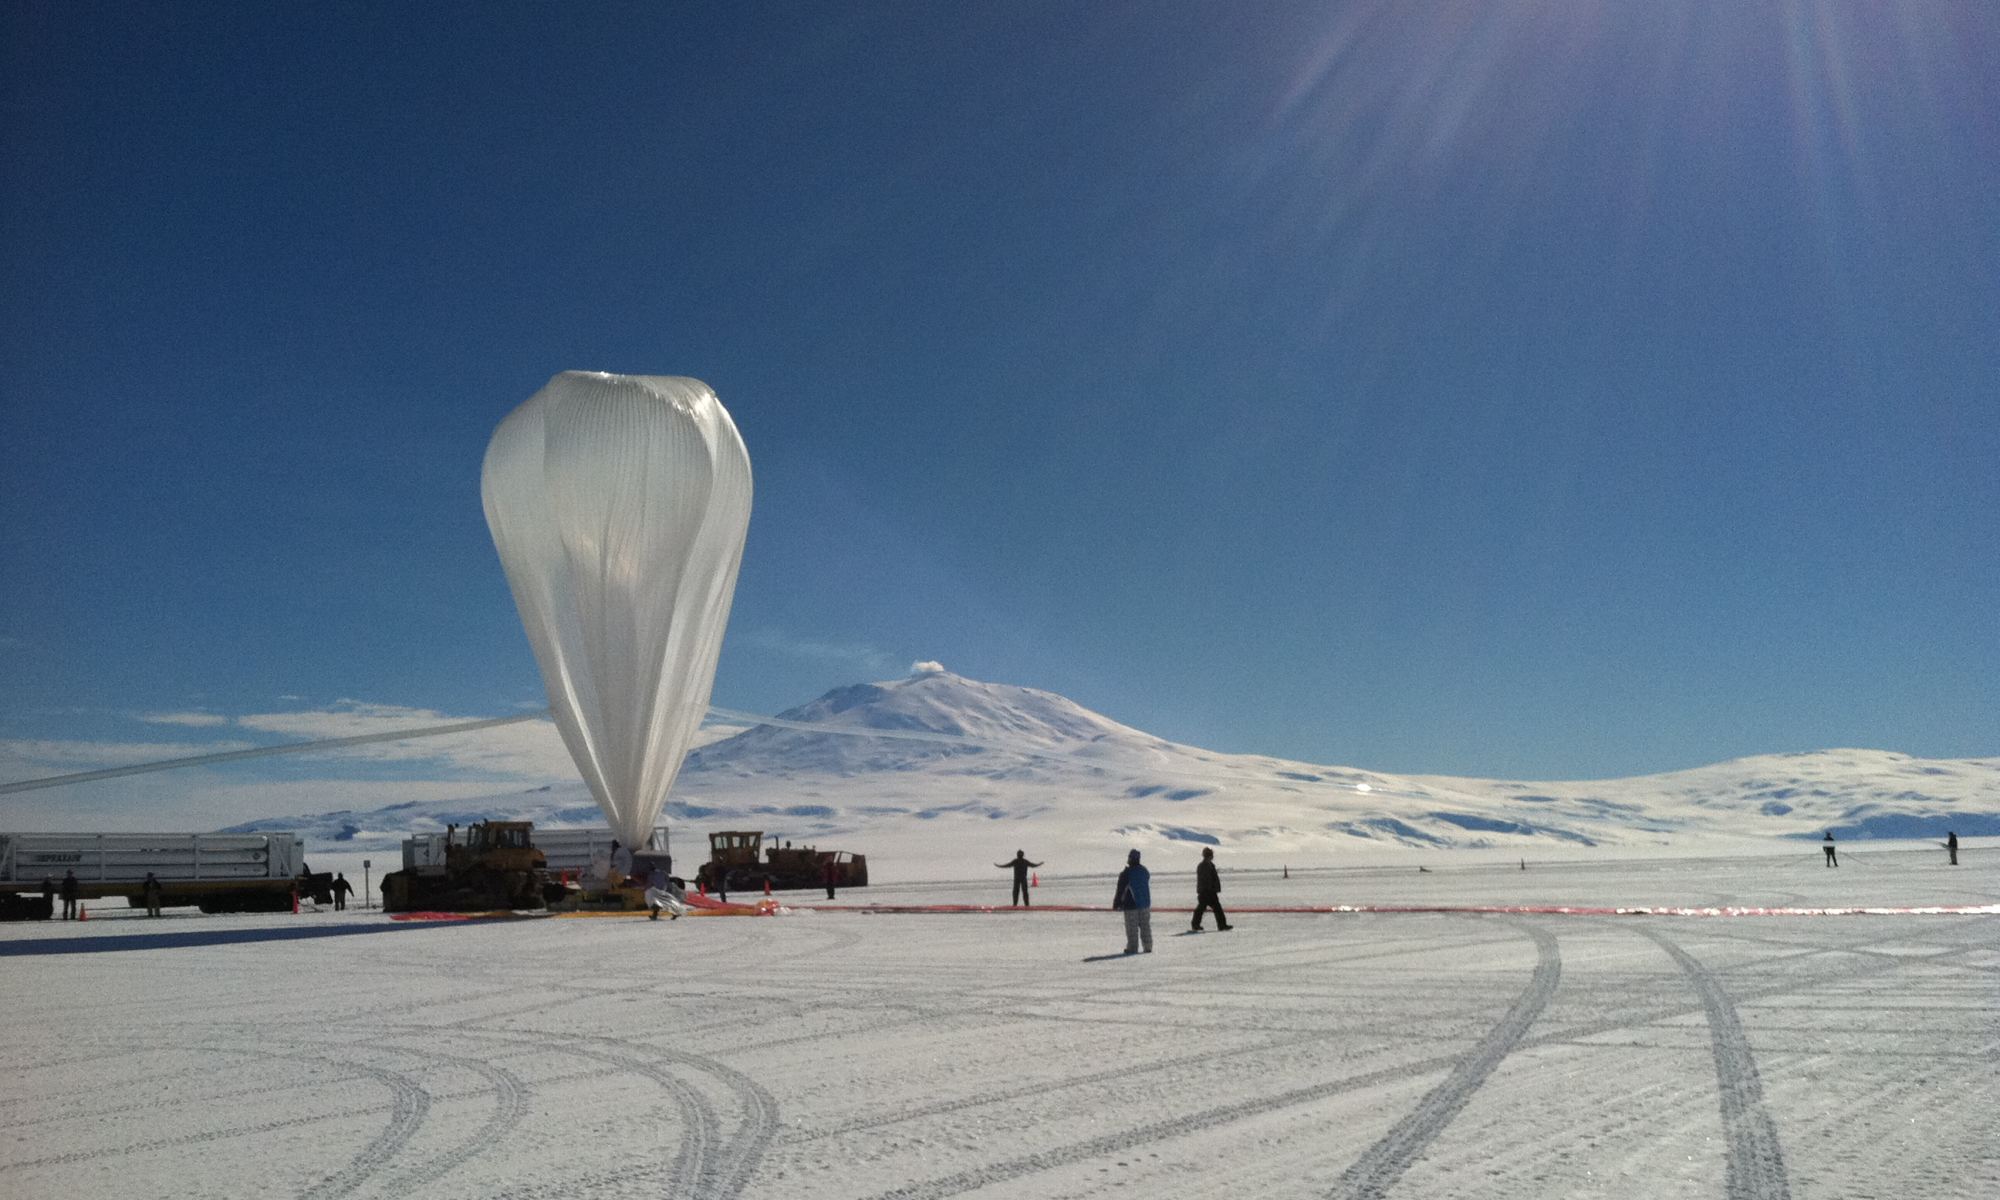 Flying high over Antarctica, a NASA long duration balloon has broken the record for longest flight by a balloon of its size. Credits: NASA/BPO